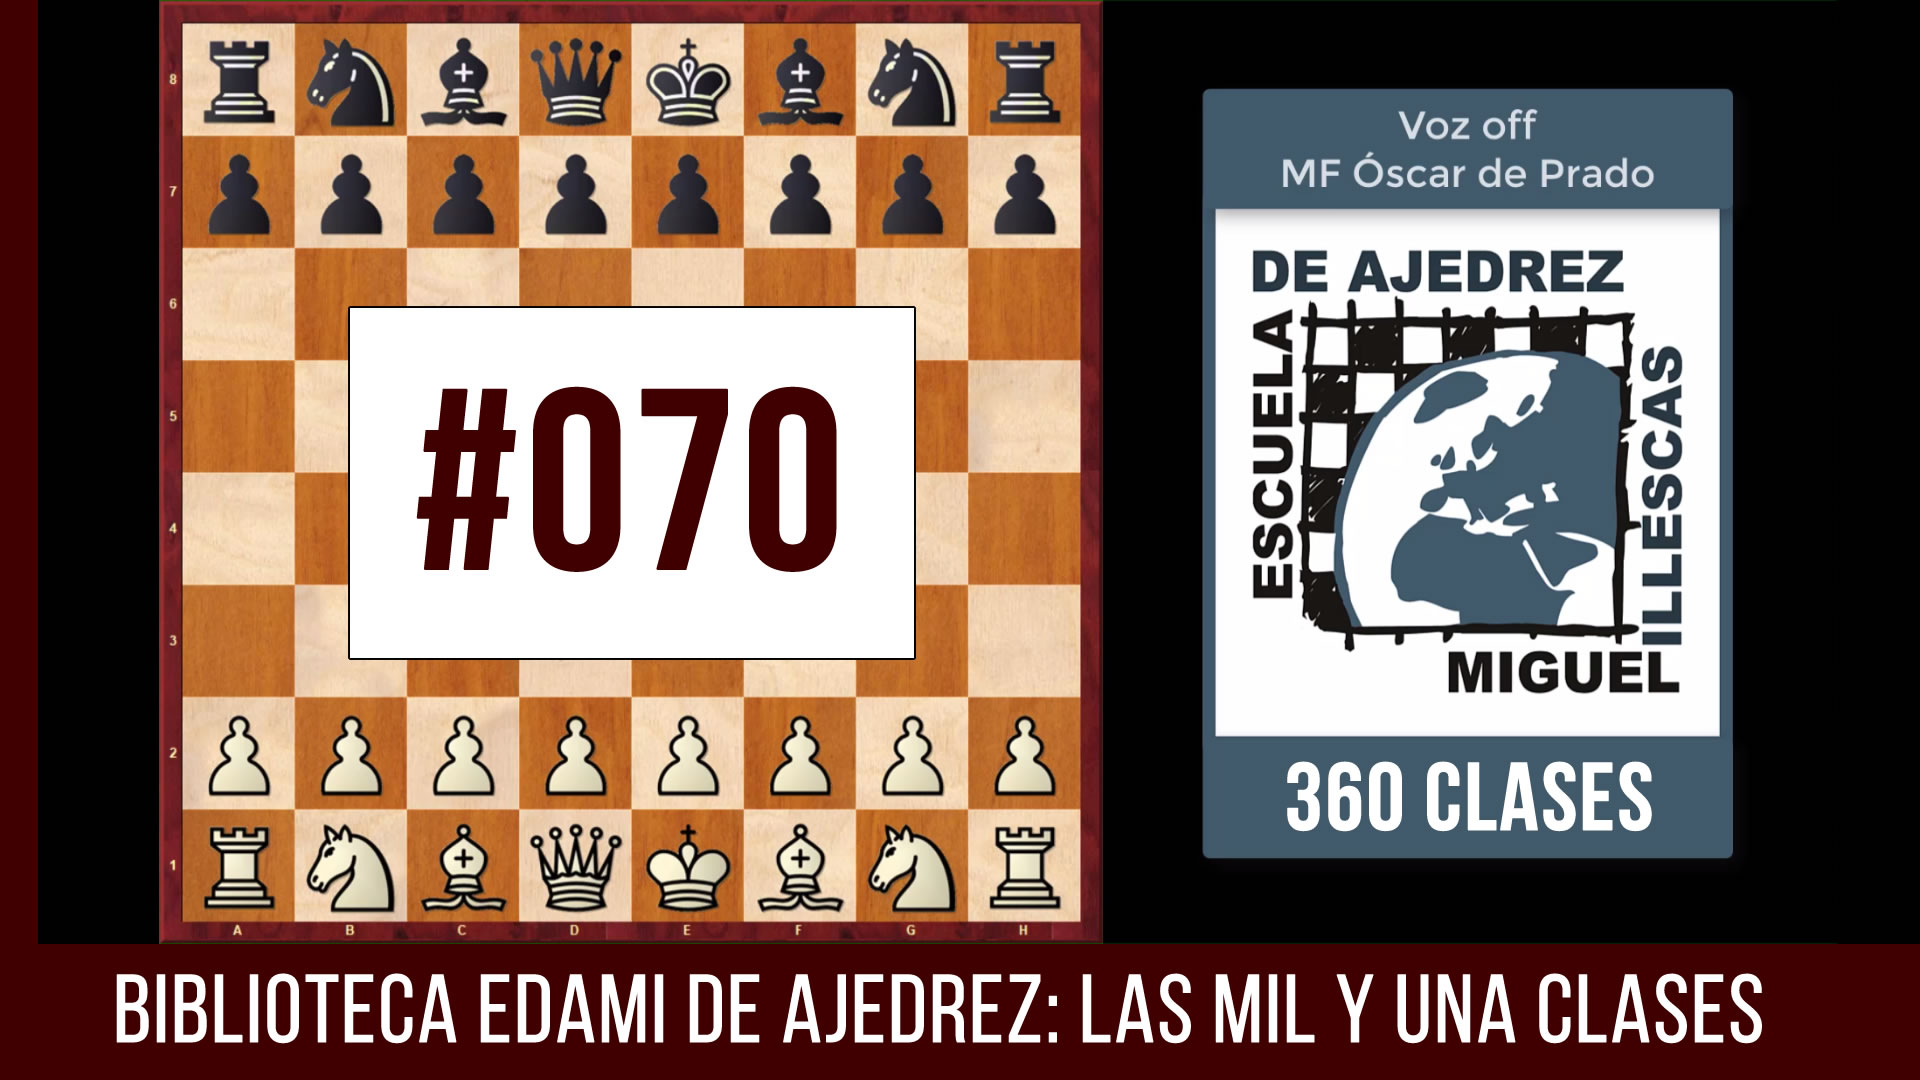 Clases de ajedrez #070 - EDAMI